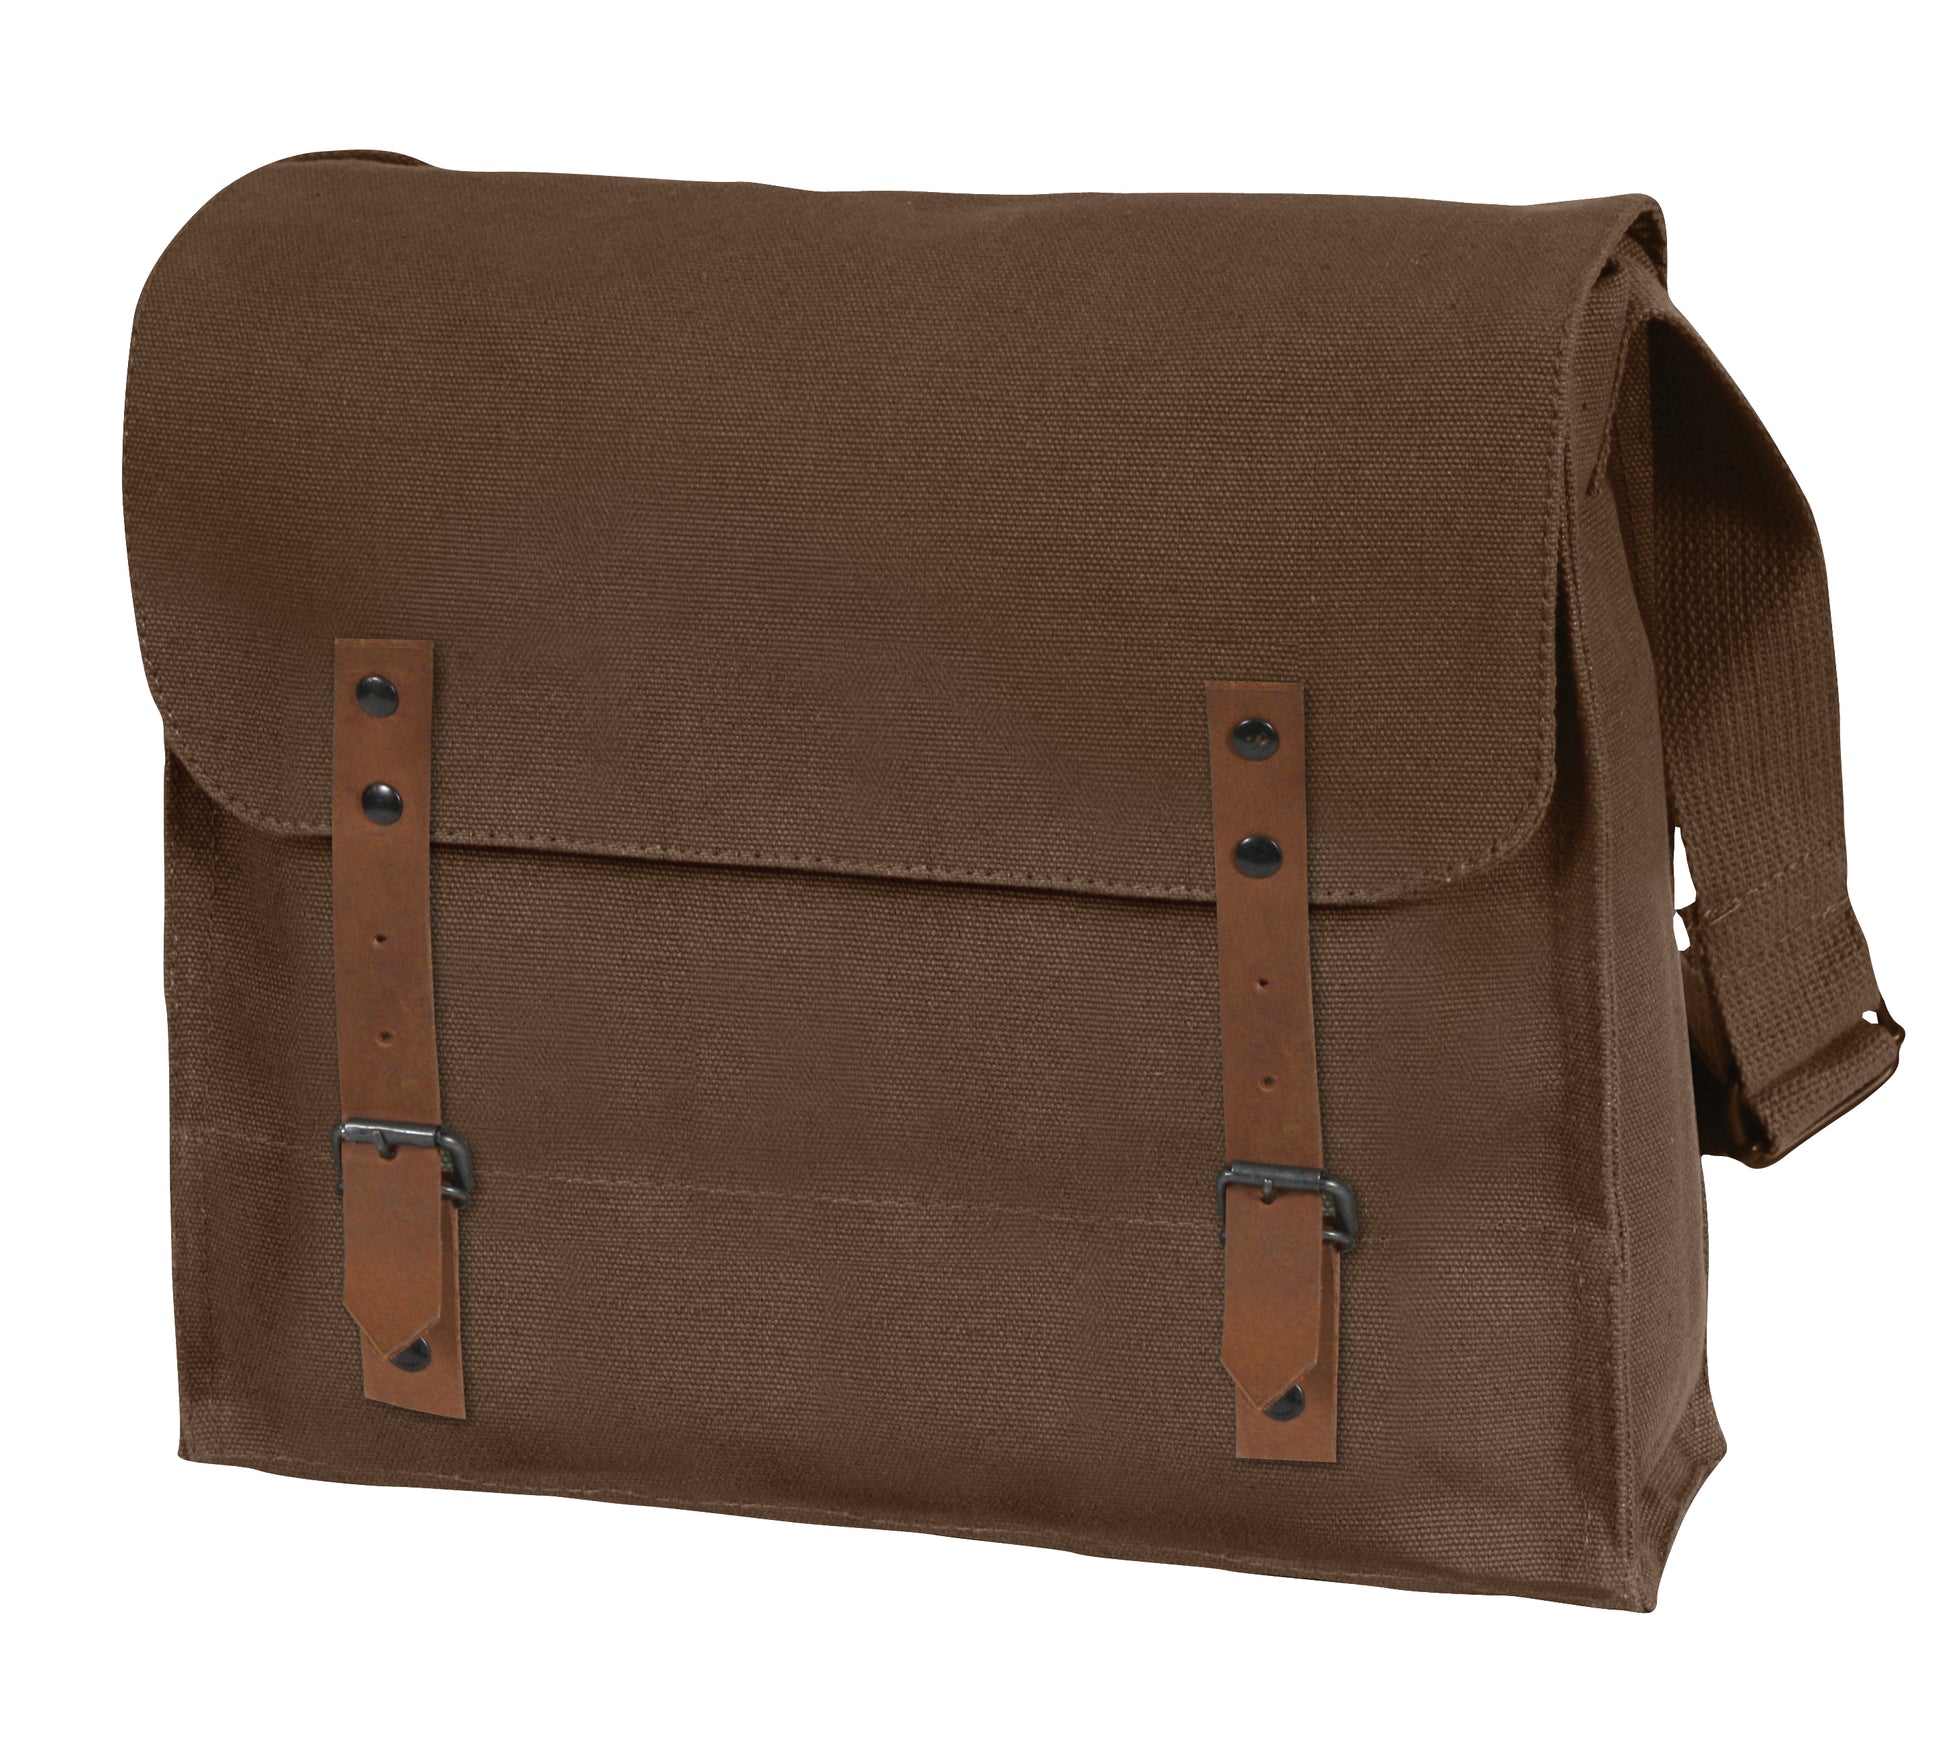 Milspec Canvas Medic Bag Messenger & Shoulder Bags MilTac Tactical Military Outdoor Gear Australia